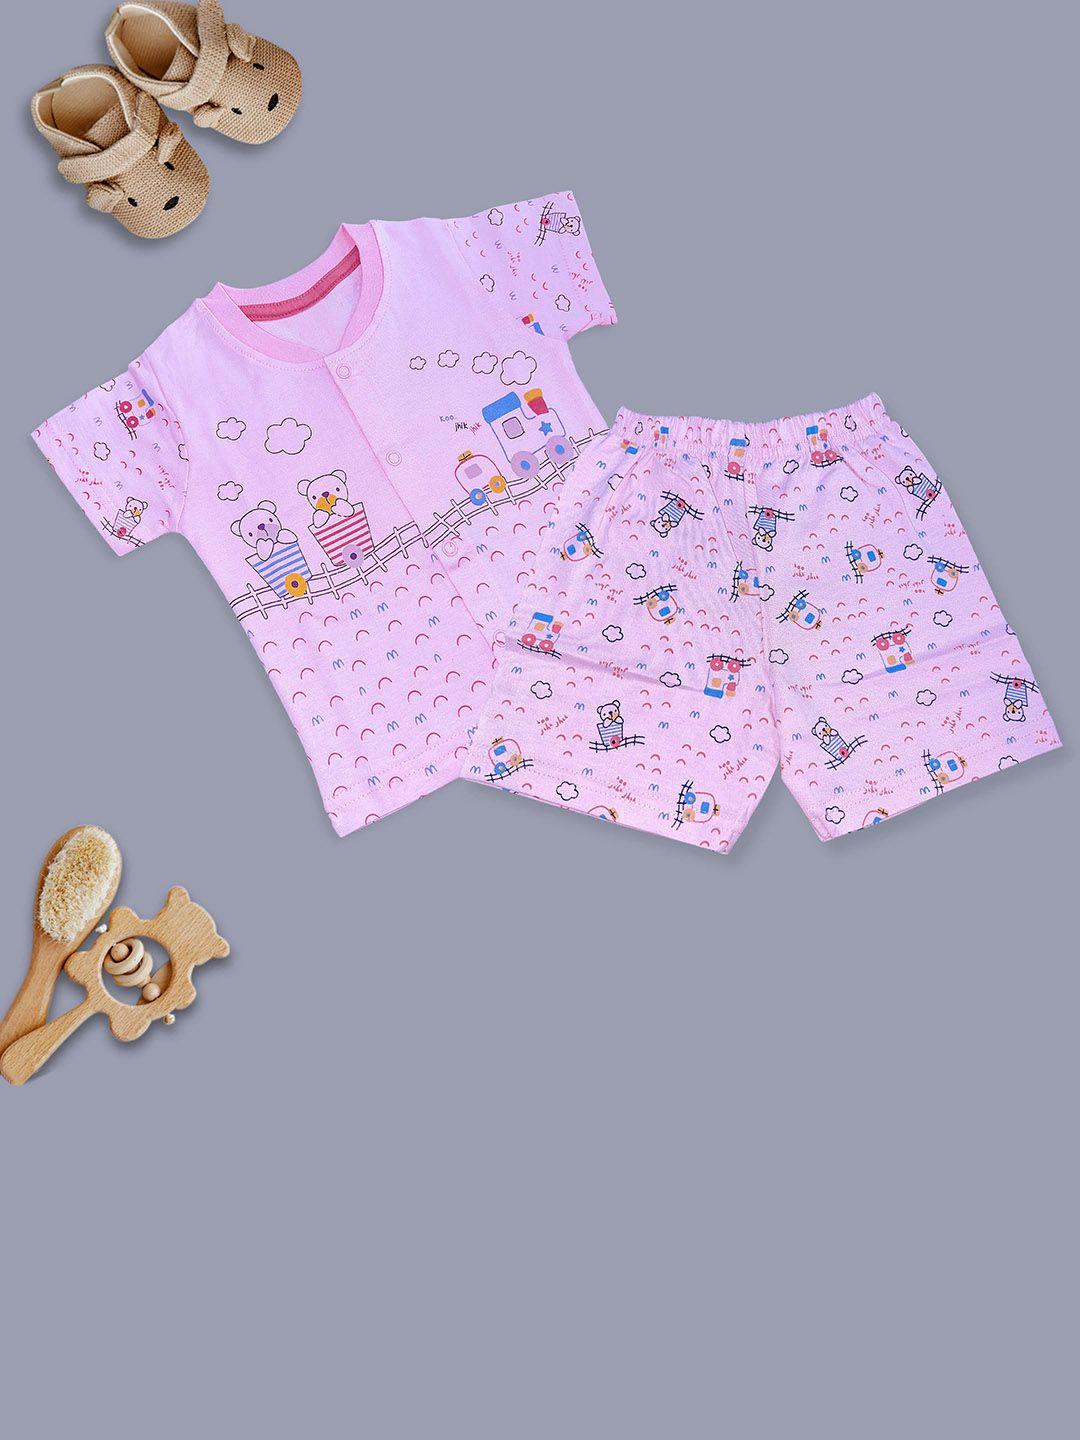 baesd infants conversational printed night suit